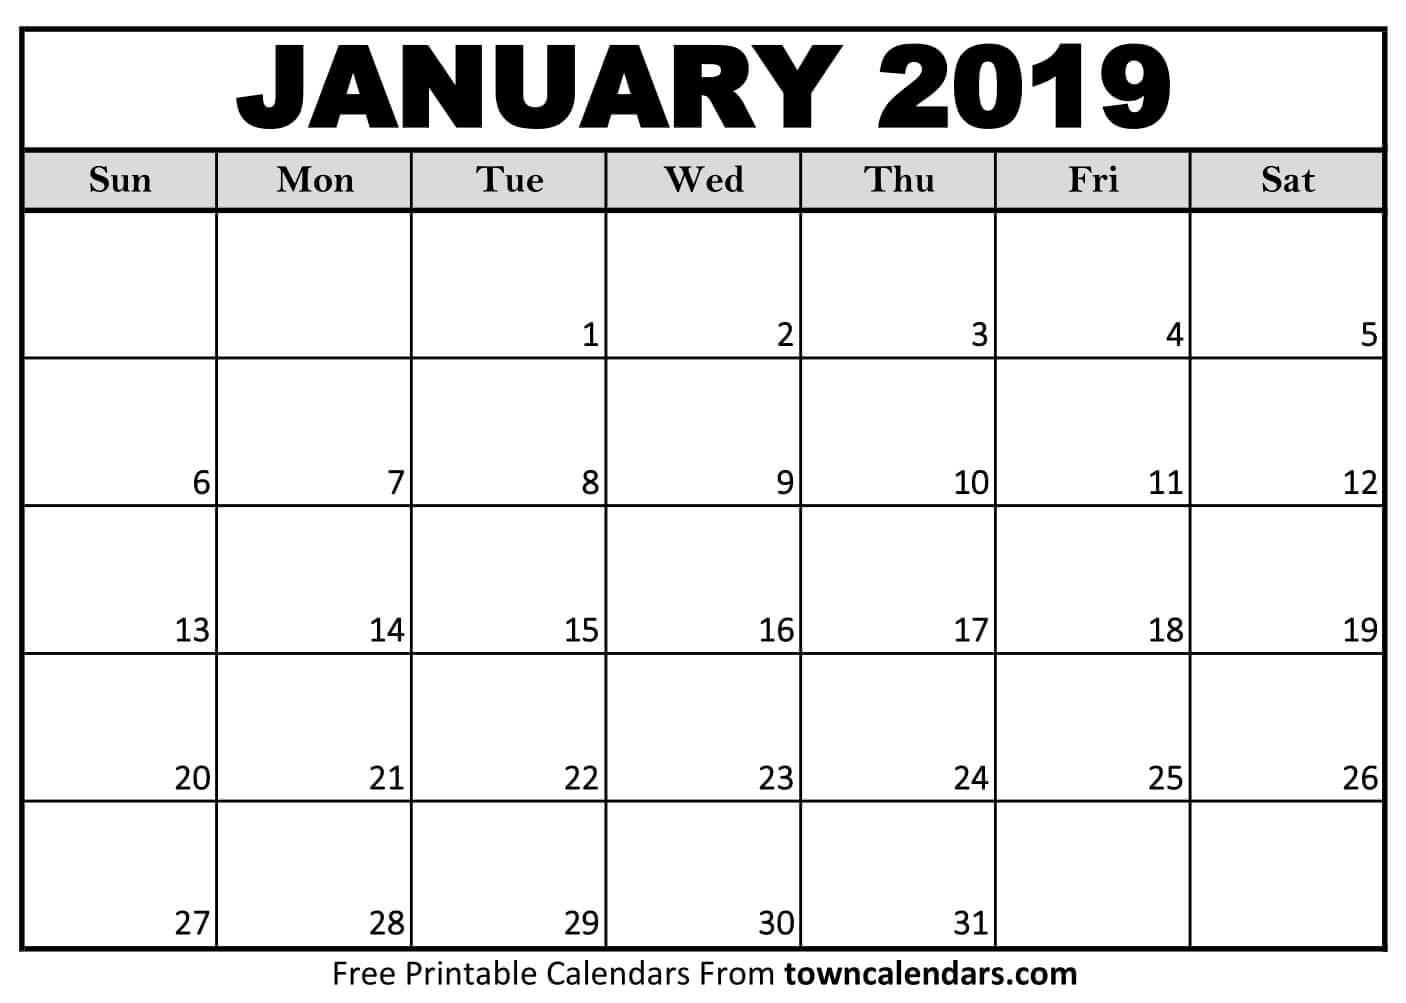 January 2019 Calendar Tumblr | Free Printable Calendar